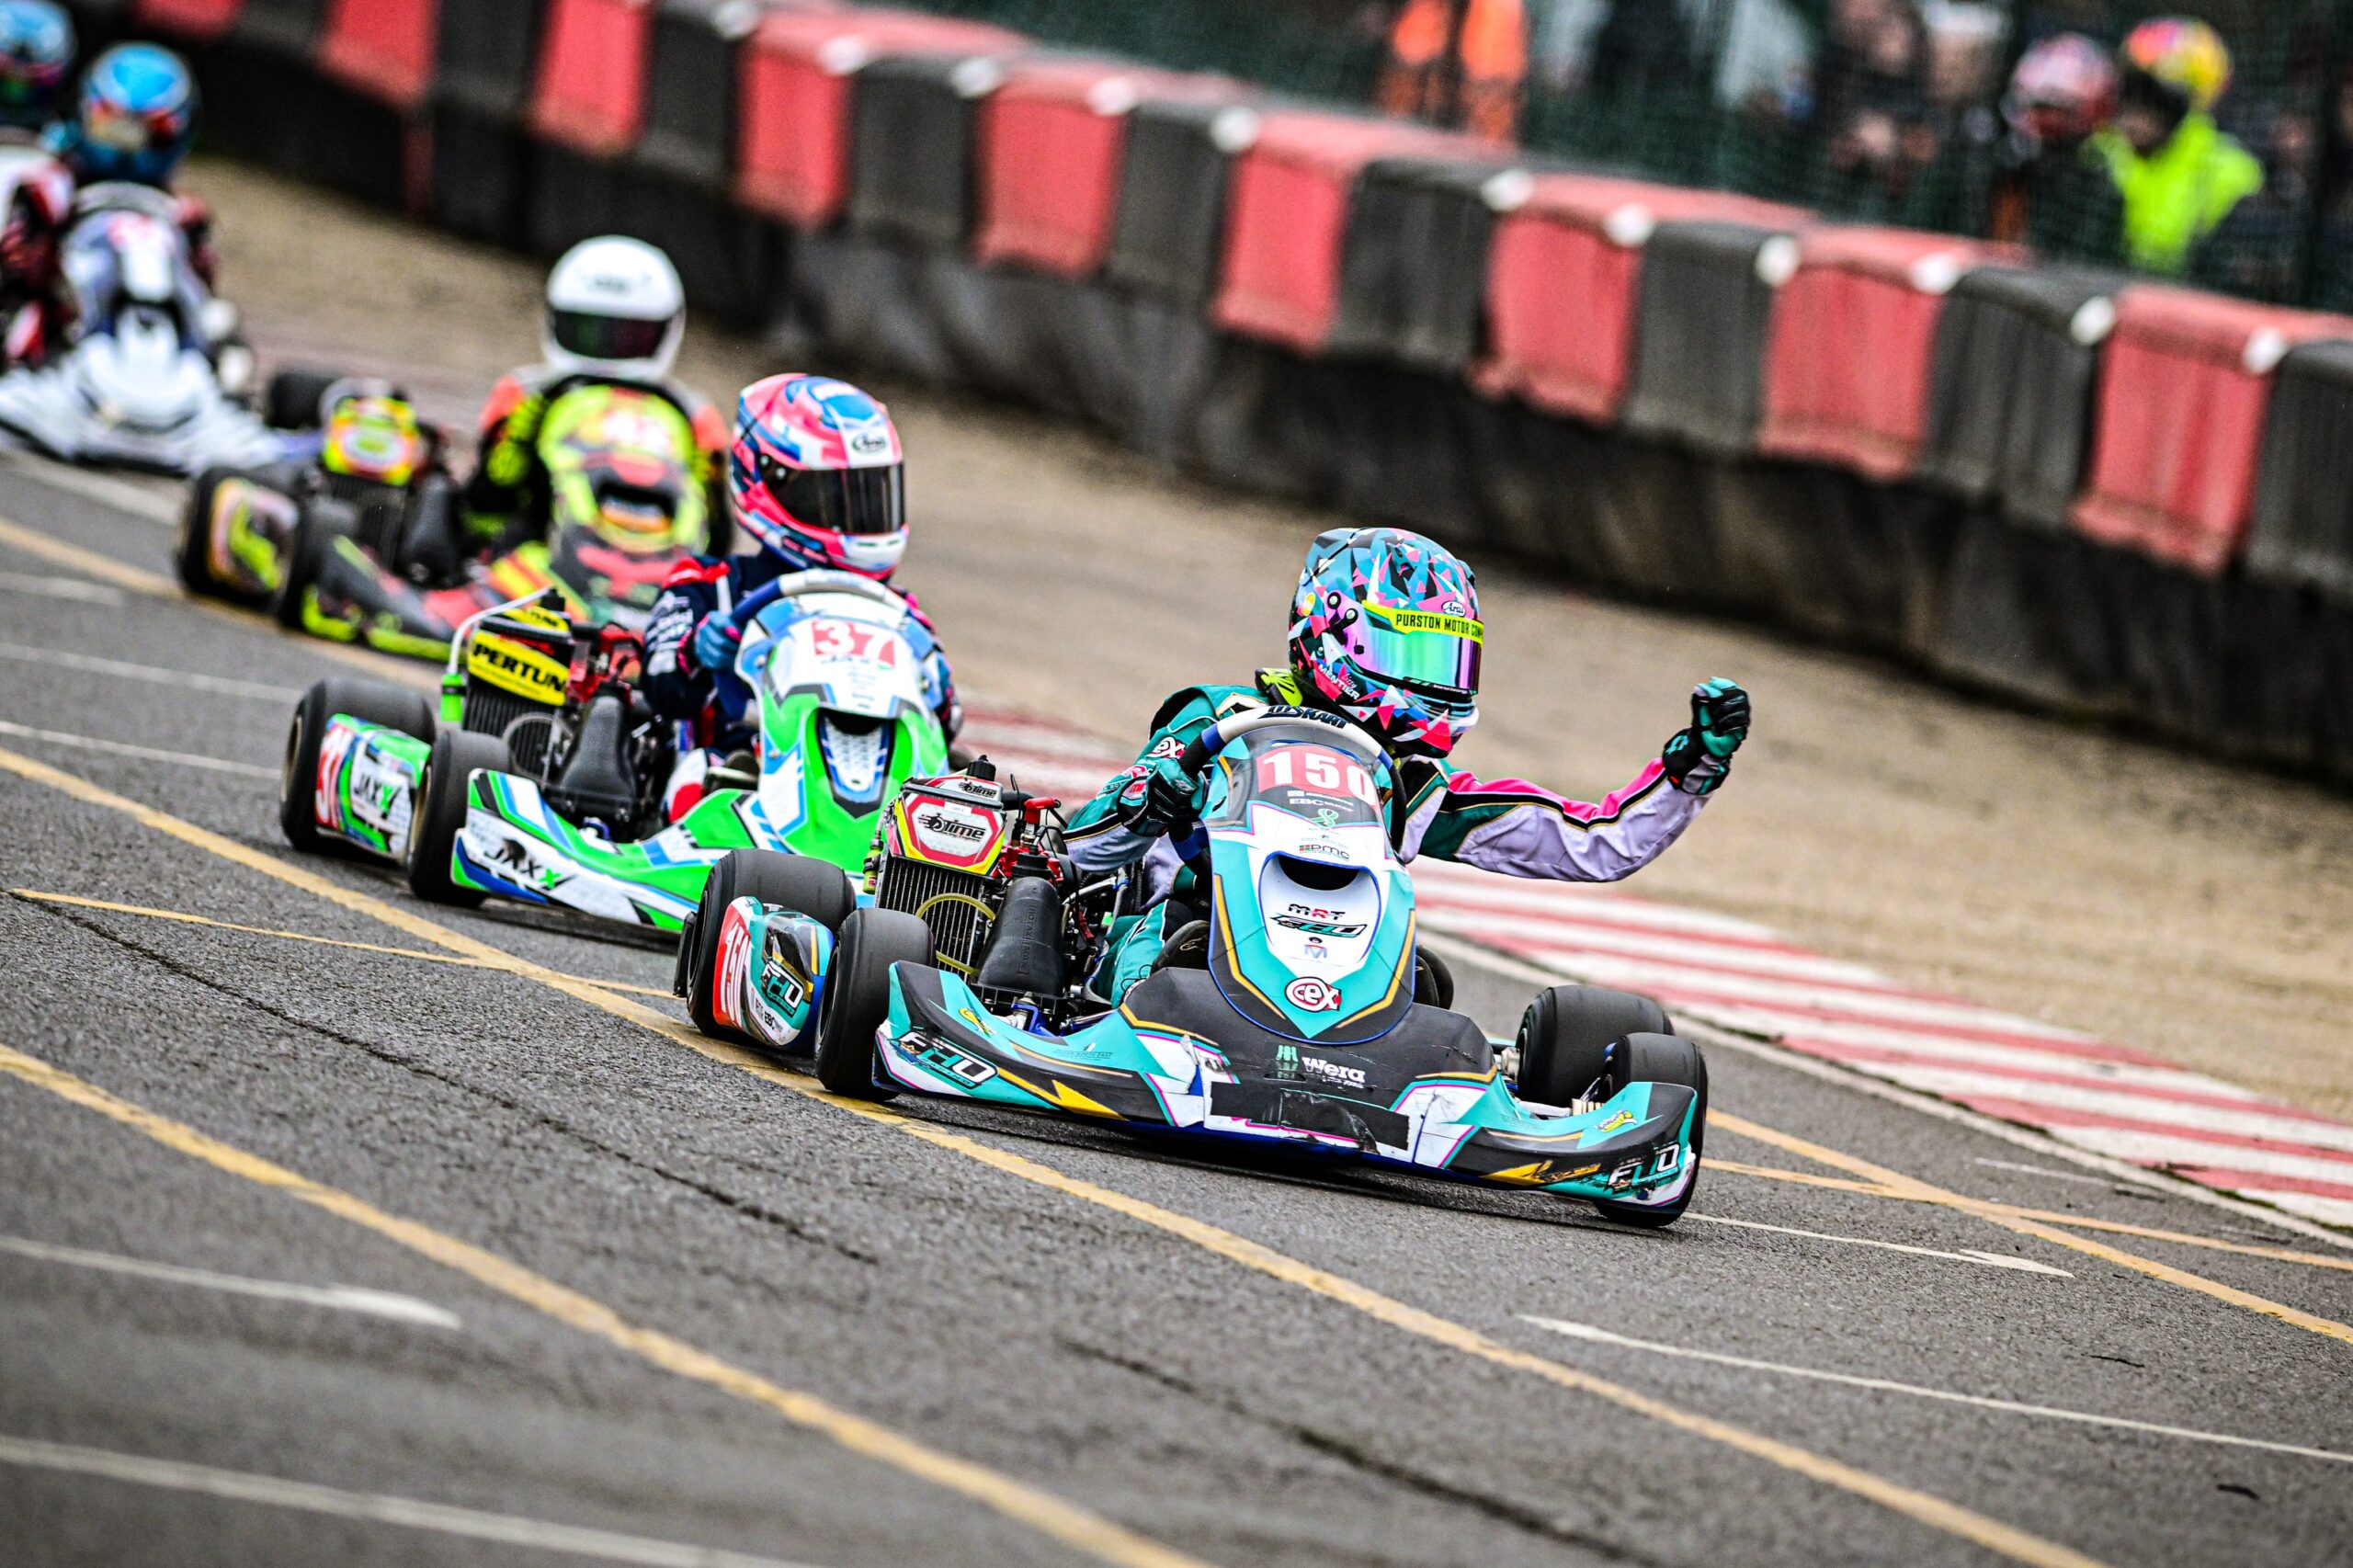 EBC-Equipped Kart Racer Lizzy Mentier Wins Junior Max Final at Shenington